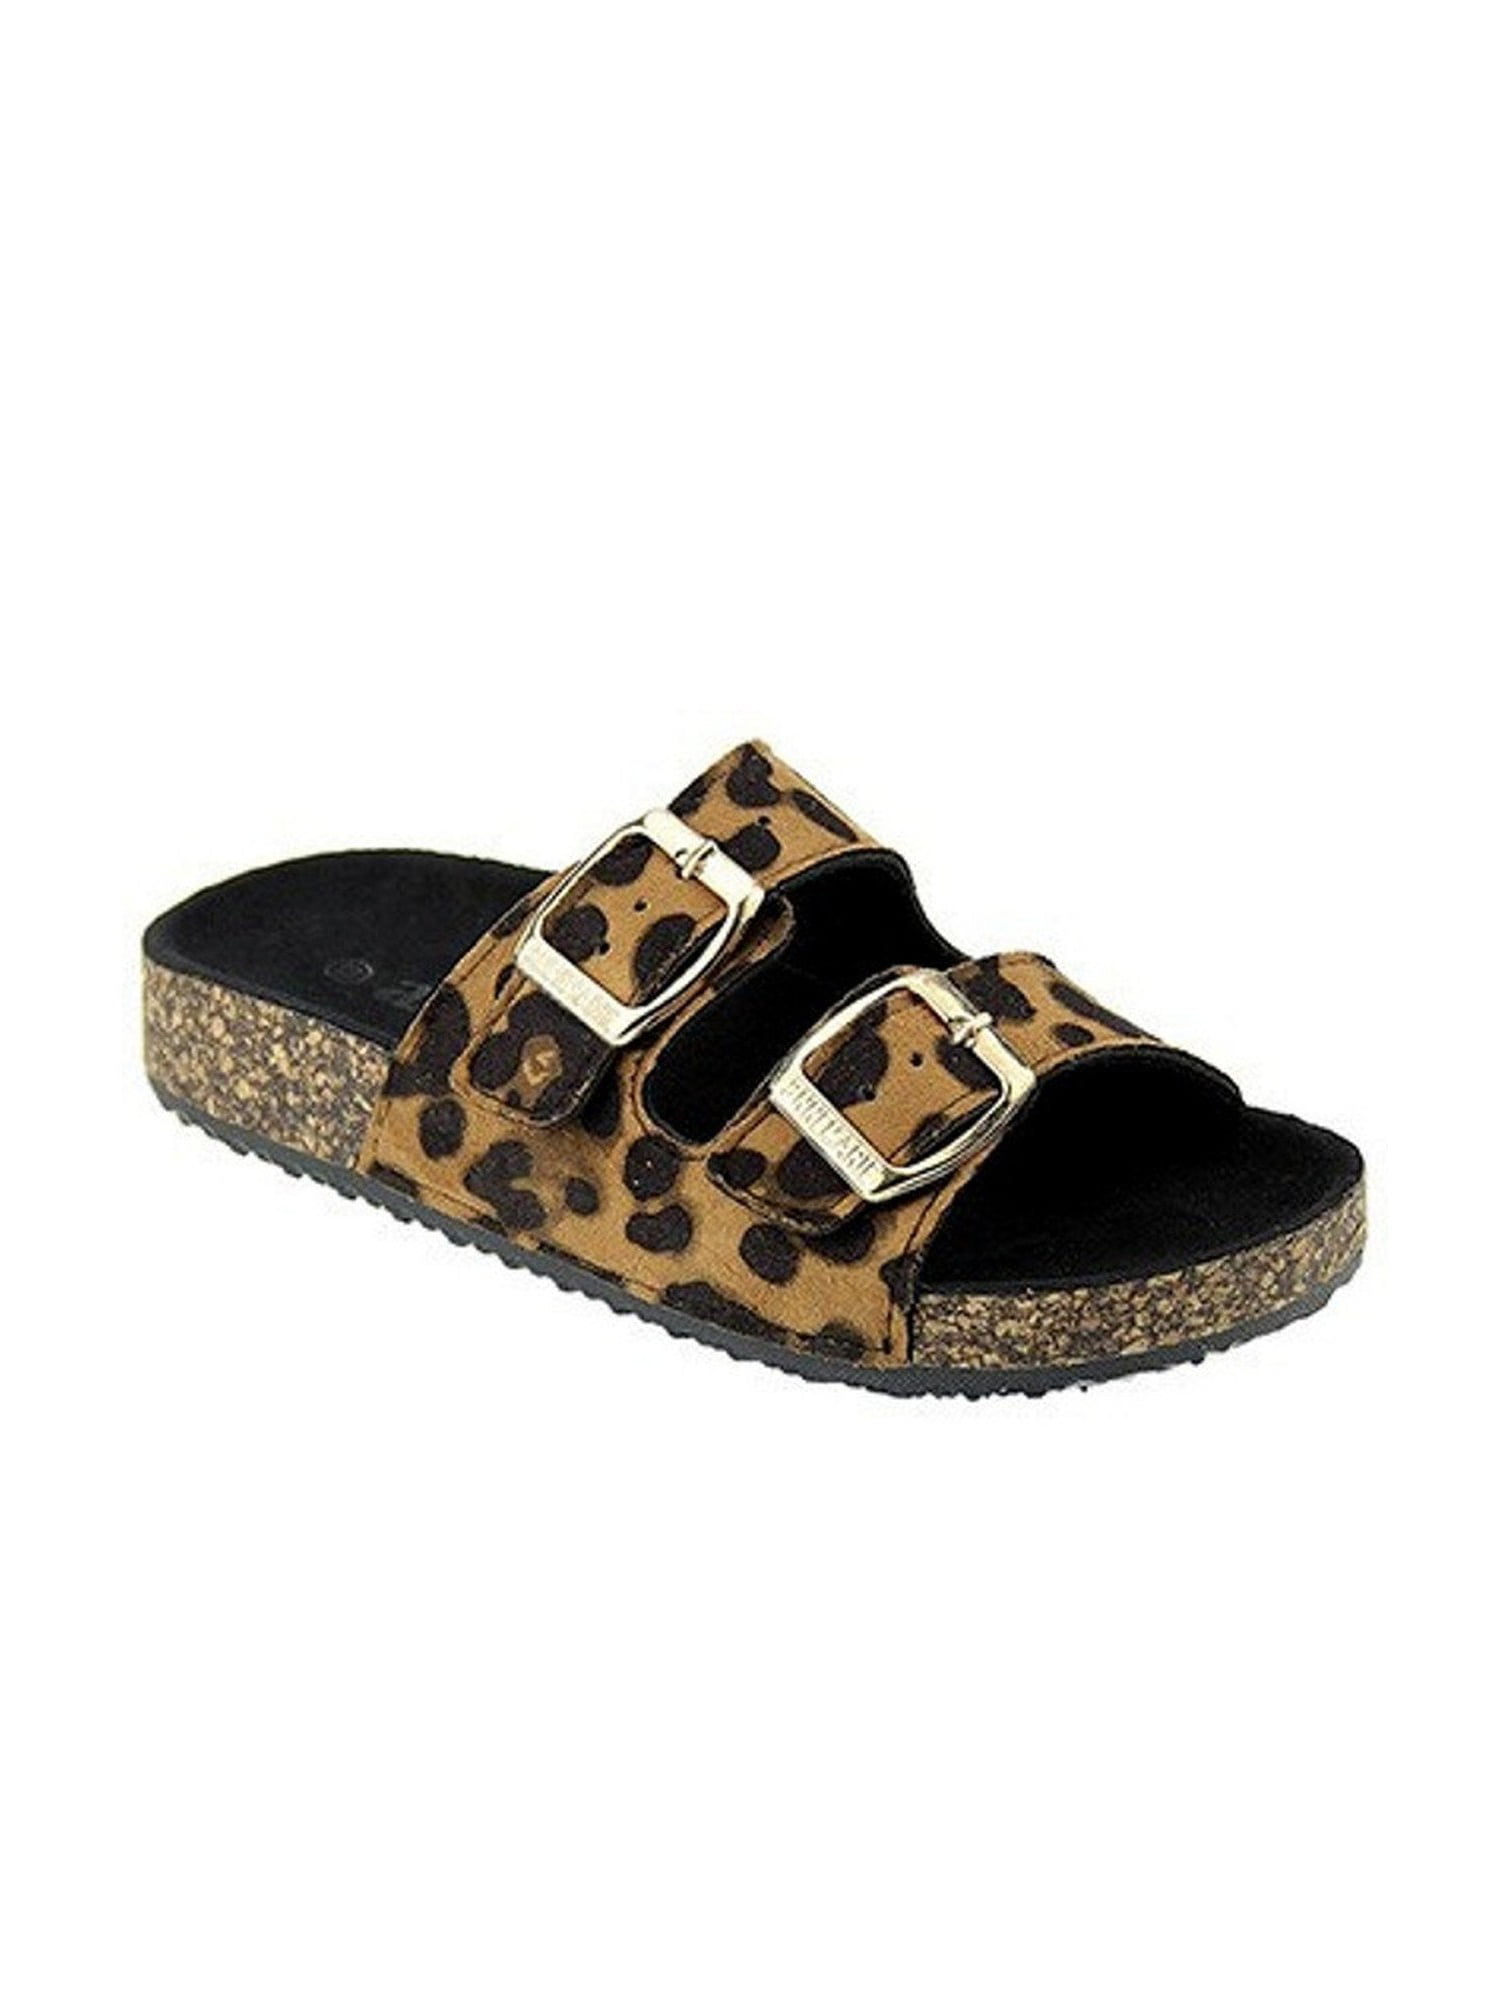 leopard buckle sandals